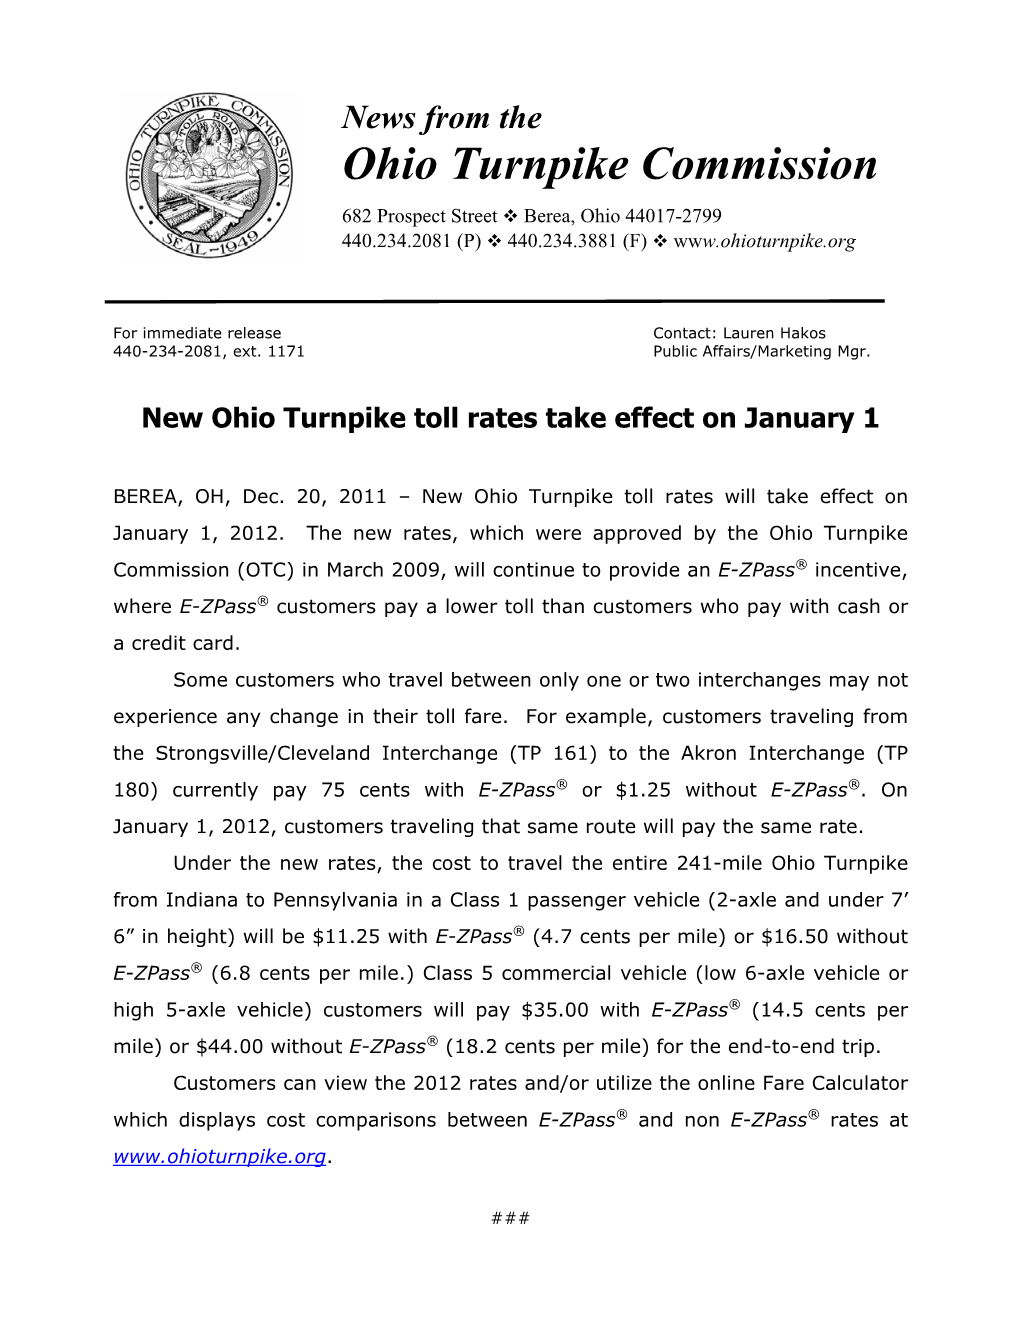 Ohio Turnpike Commission